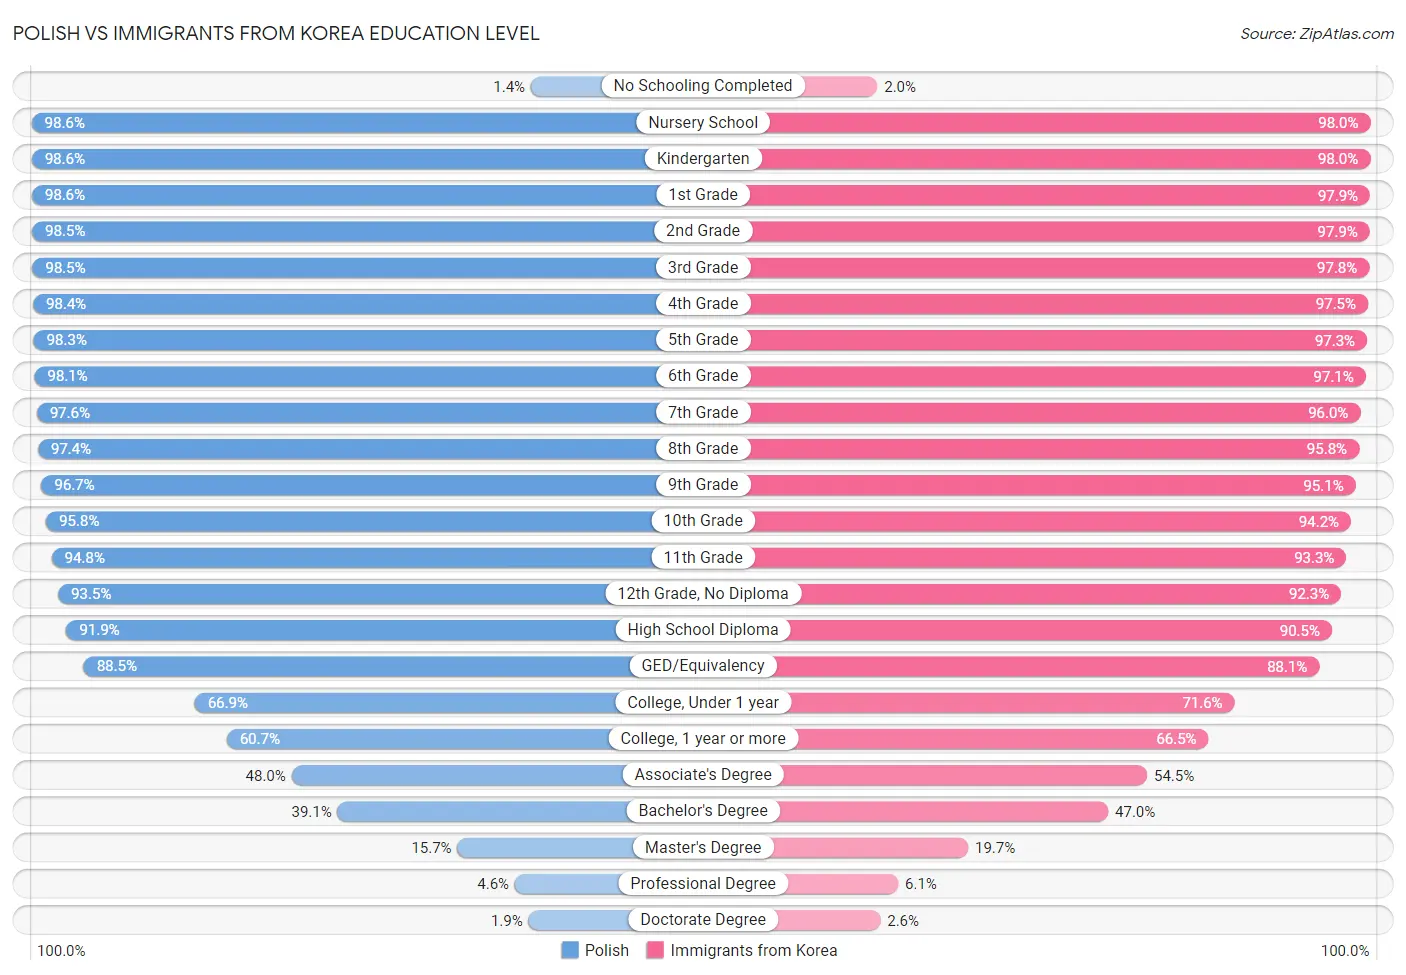 Polish vs Immigrants from Korea Education Level